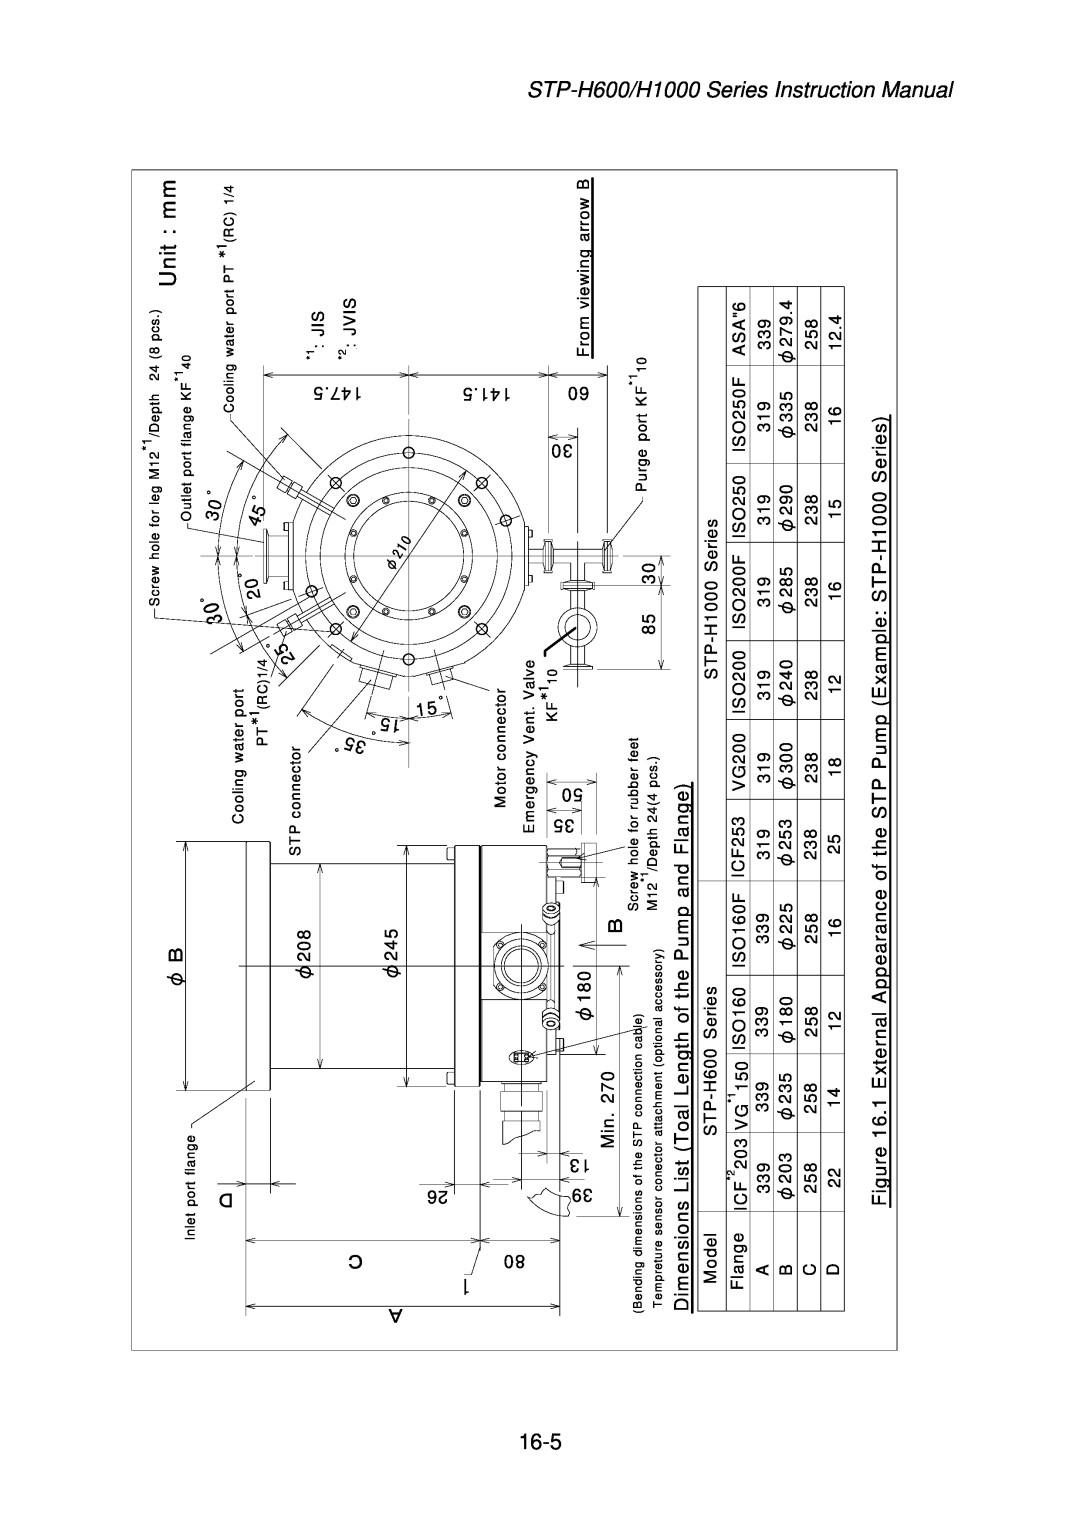 Seiko Instruments MT-17E-003-D instruction manual STP-H600/H1000 